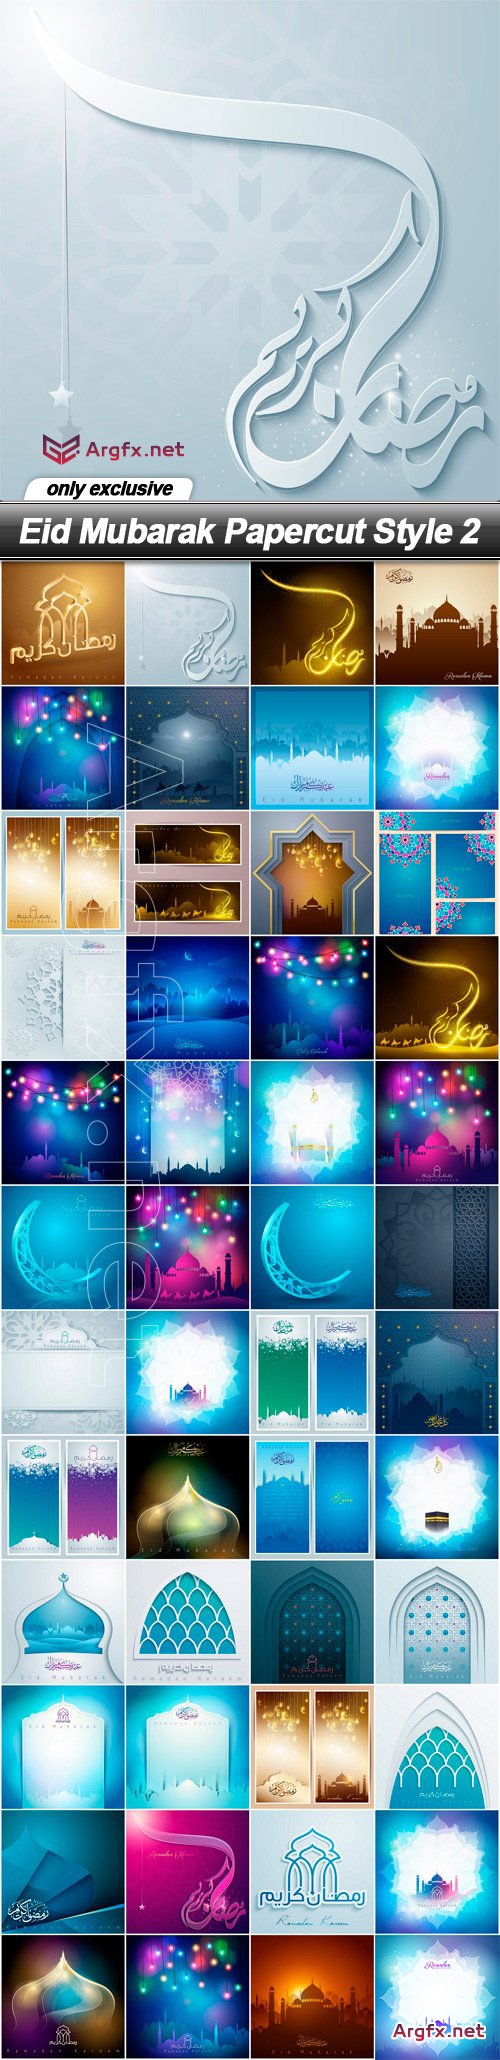  Eid Mubarak Papercut Style 2 - 48 EPS